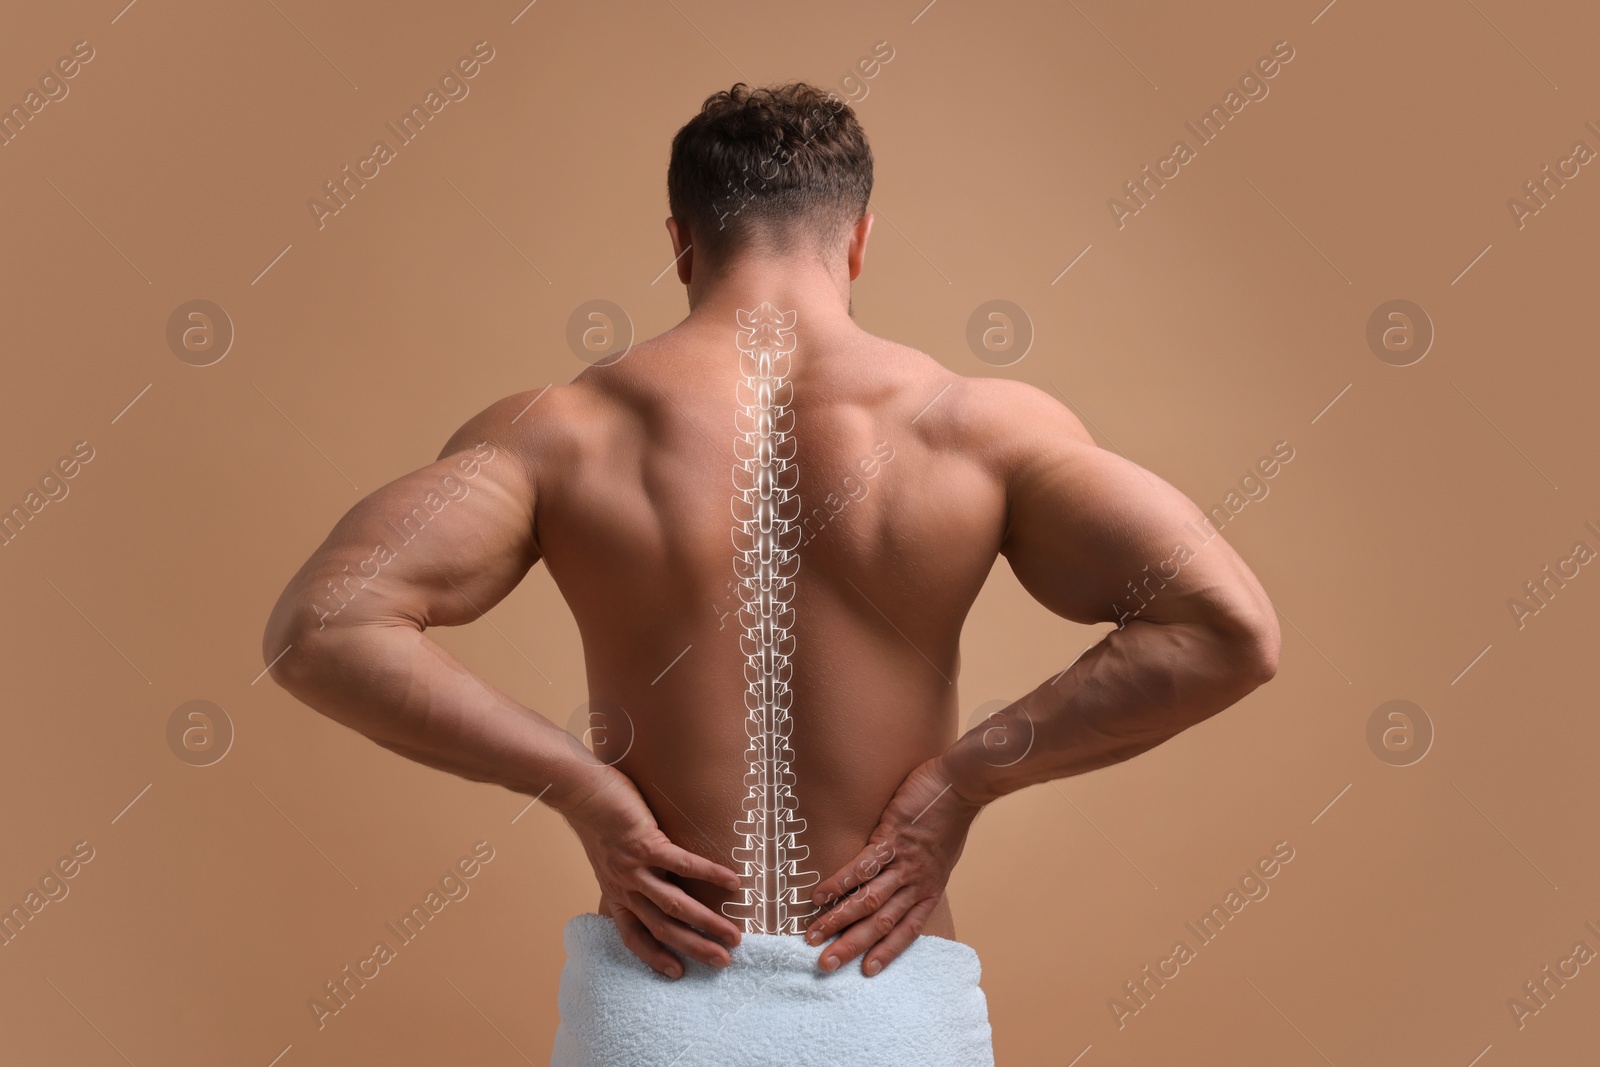 Image of Muscular man on beige background, back view. Illustration of spine